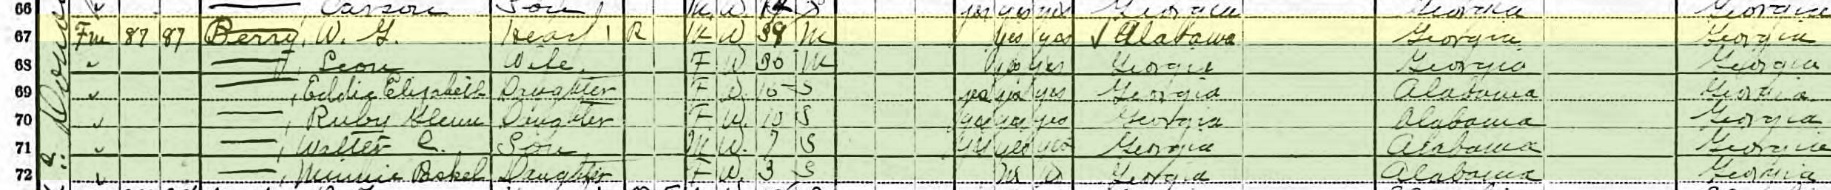 Walter Glen Berry 1920 census GA.